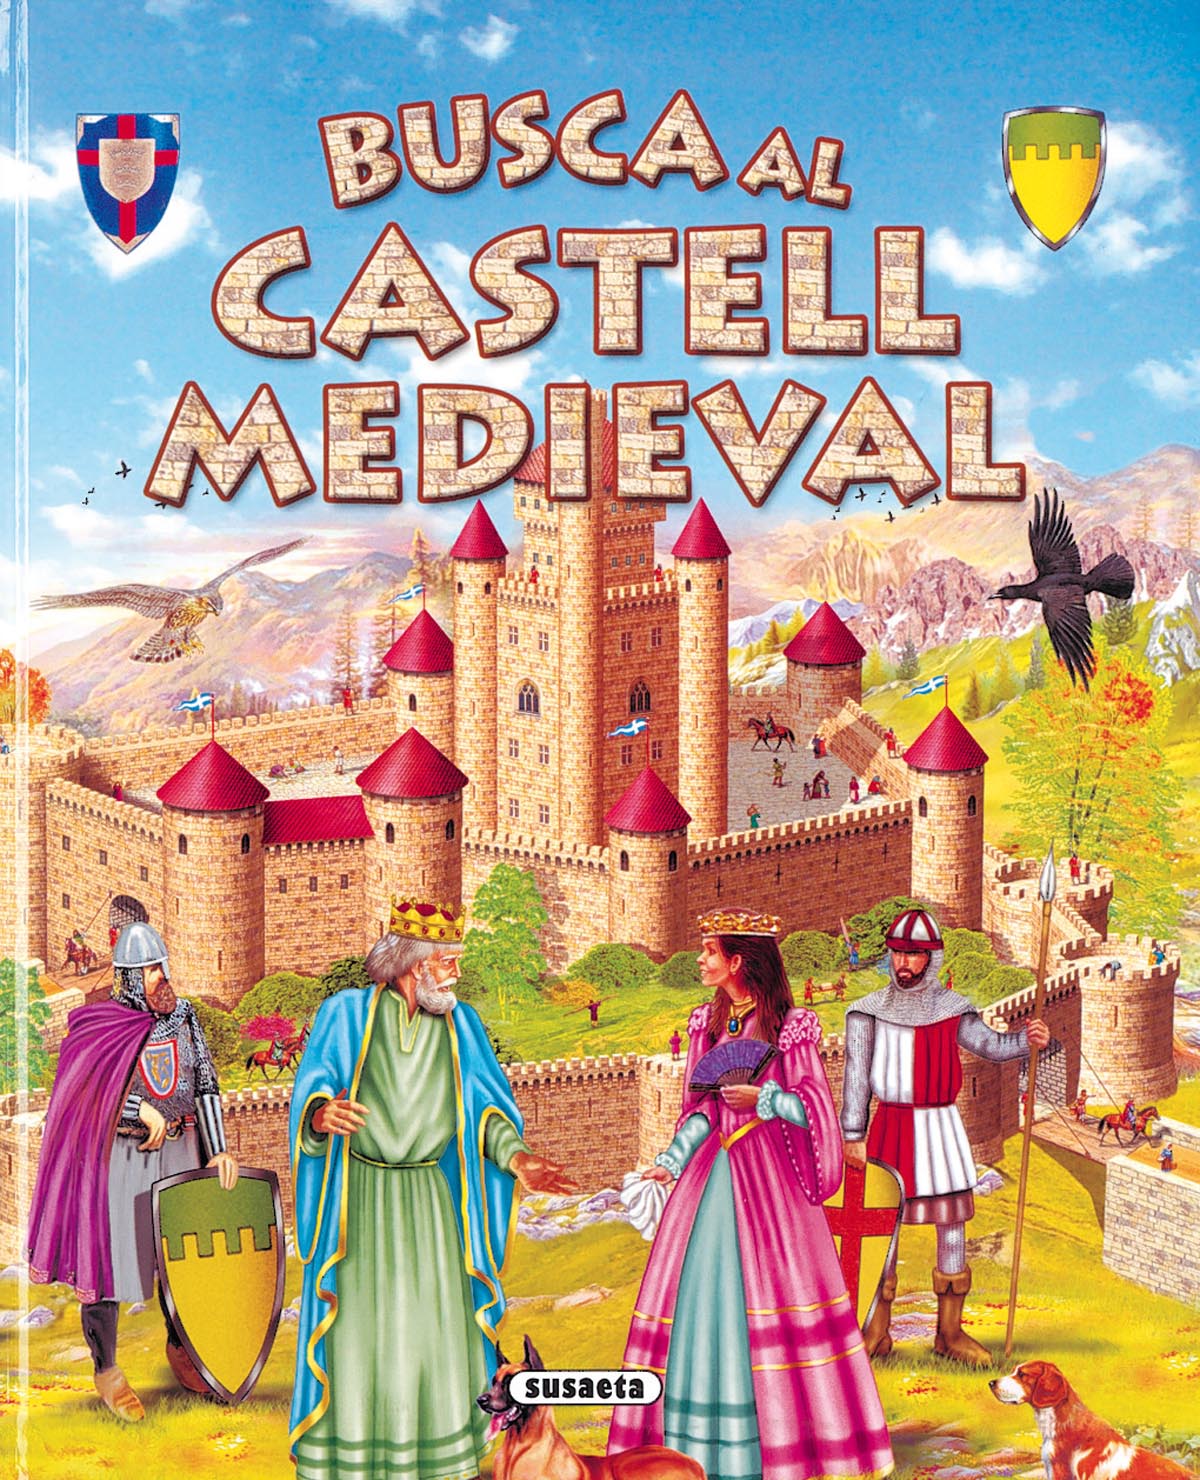 Busca al castell medieval